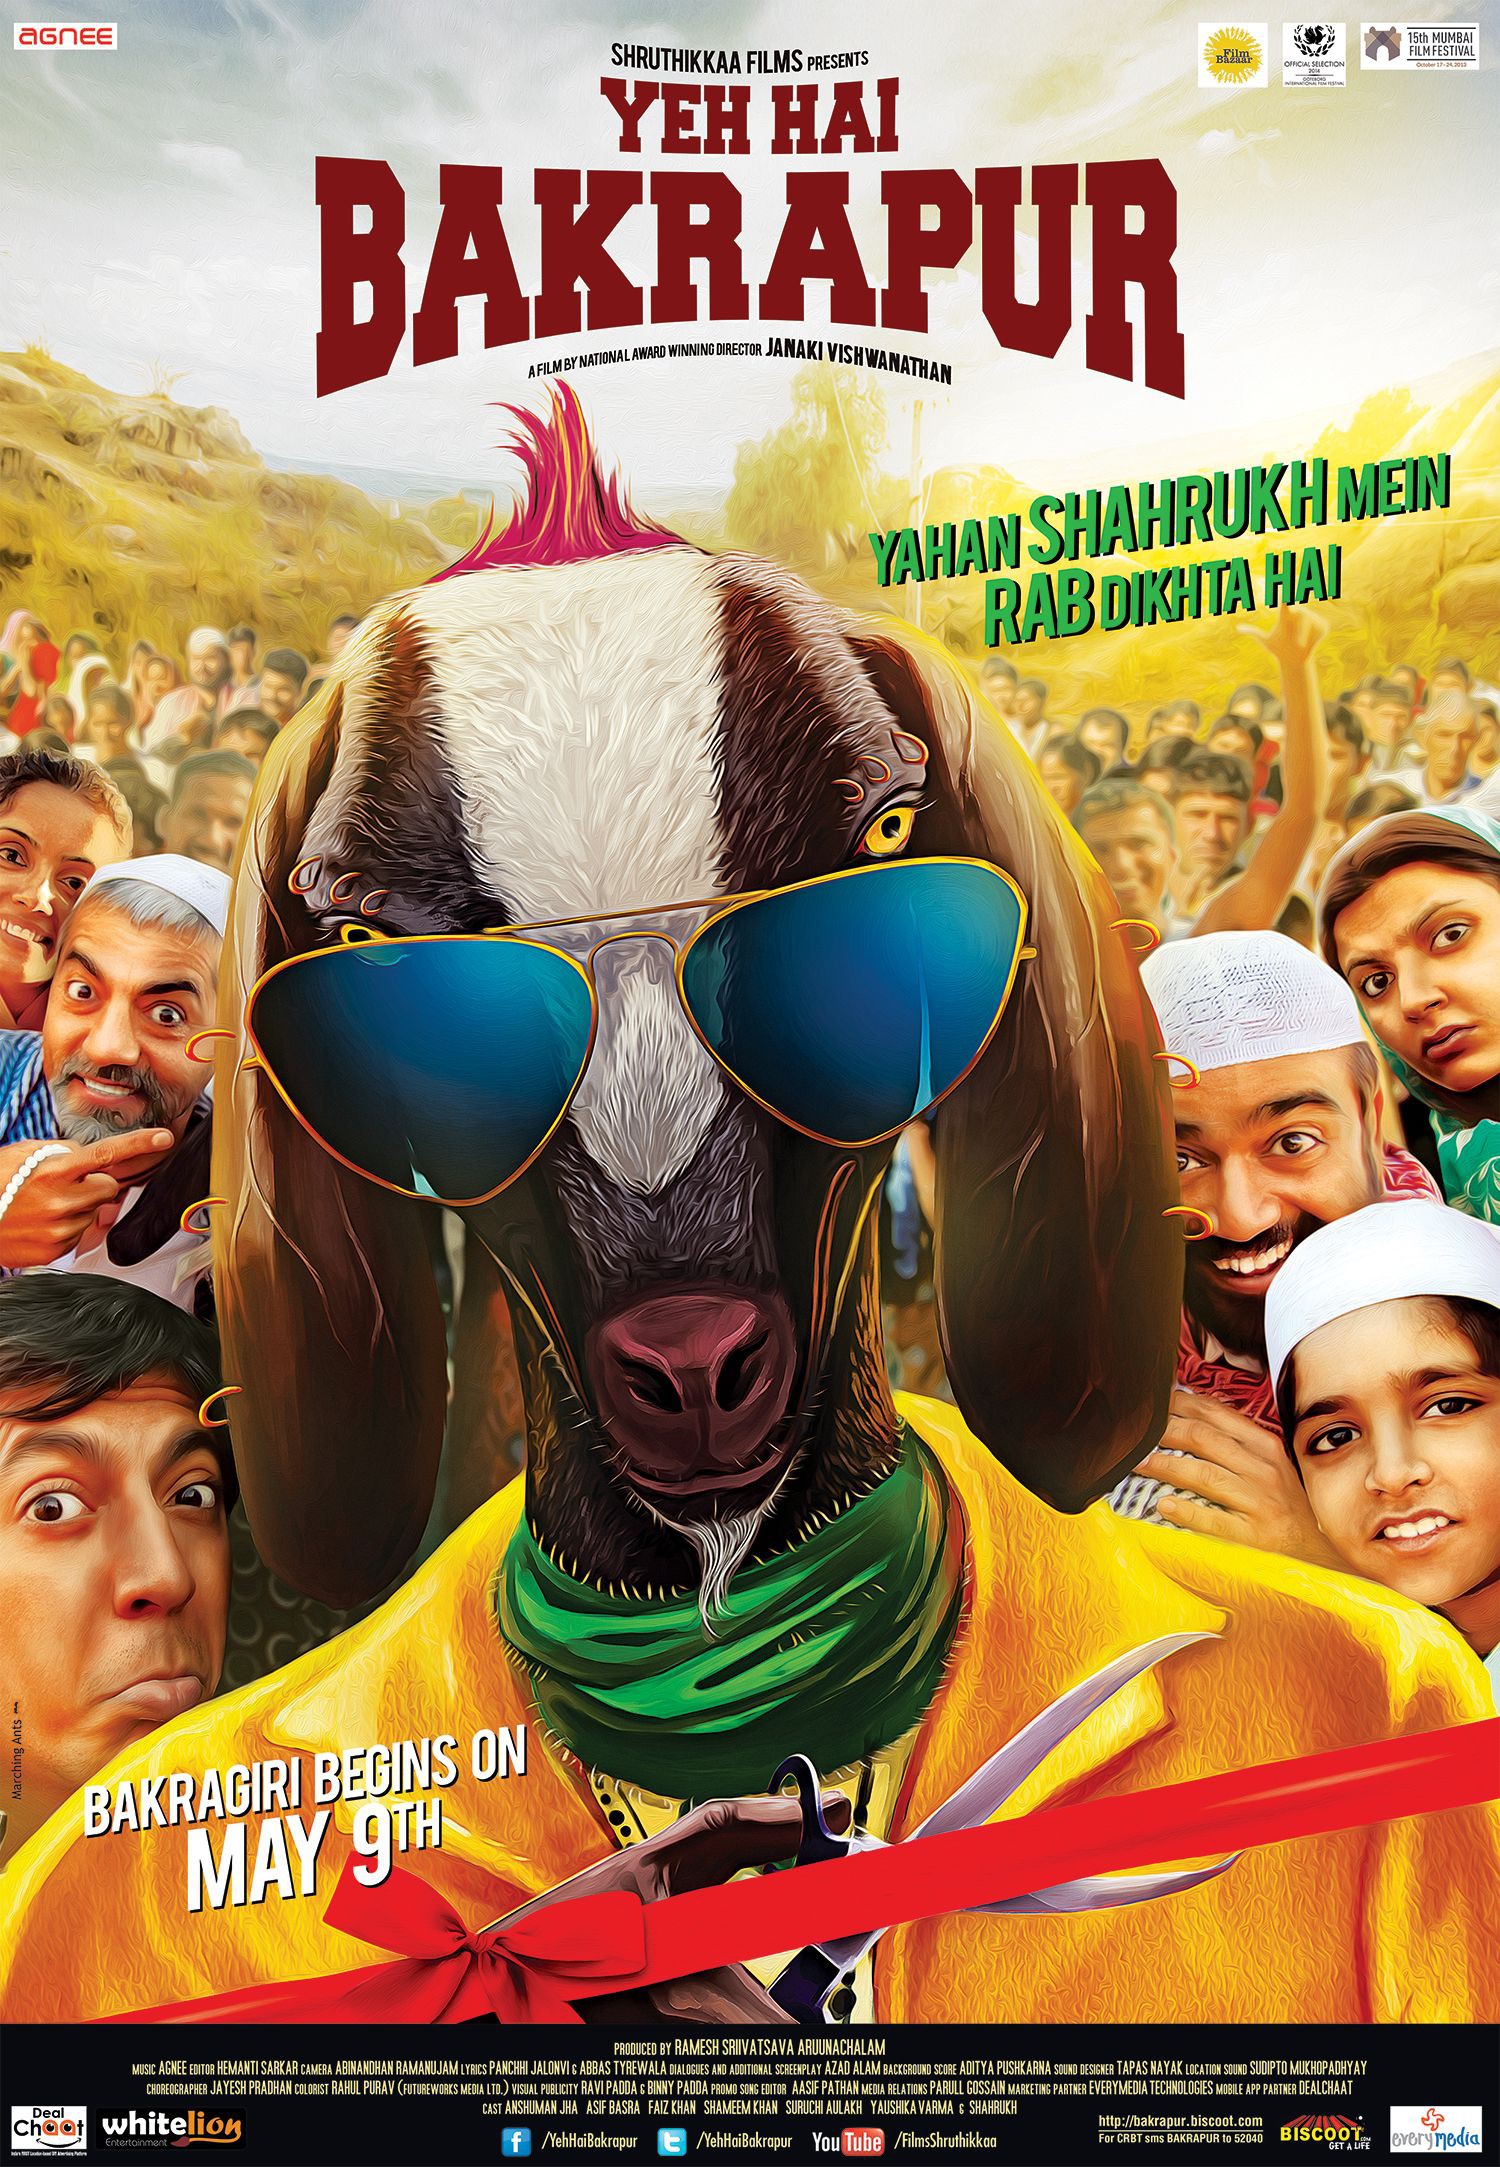 Mega Sized Movie Poster Image for Yeh Hai Bakrapur (#1 of 3)